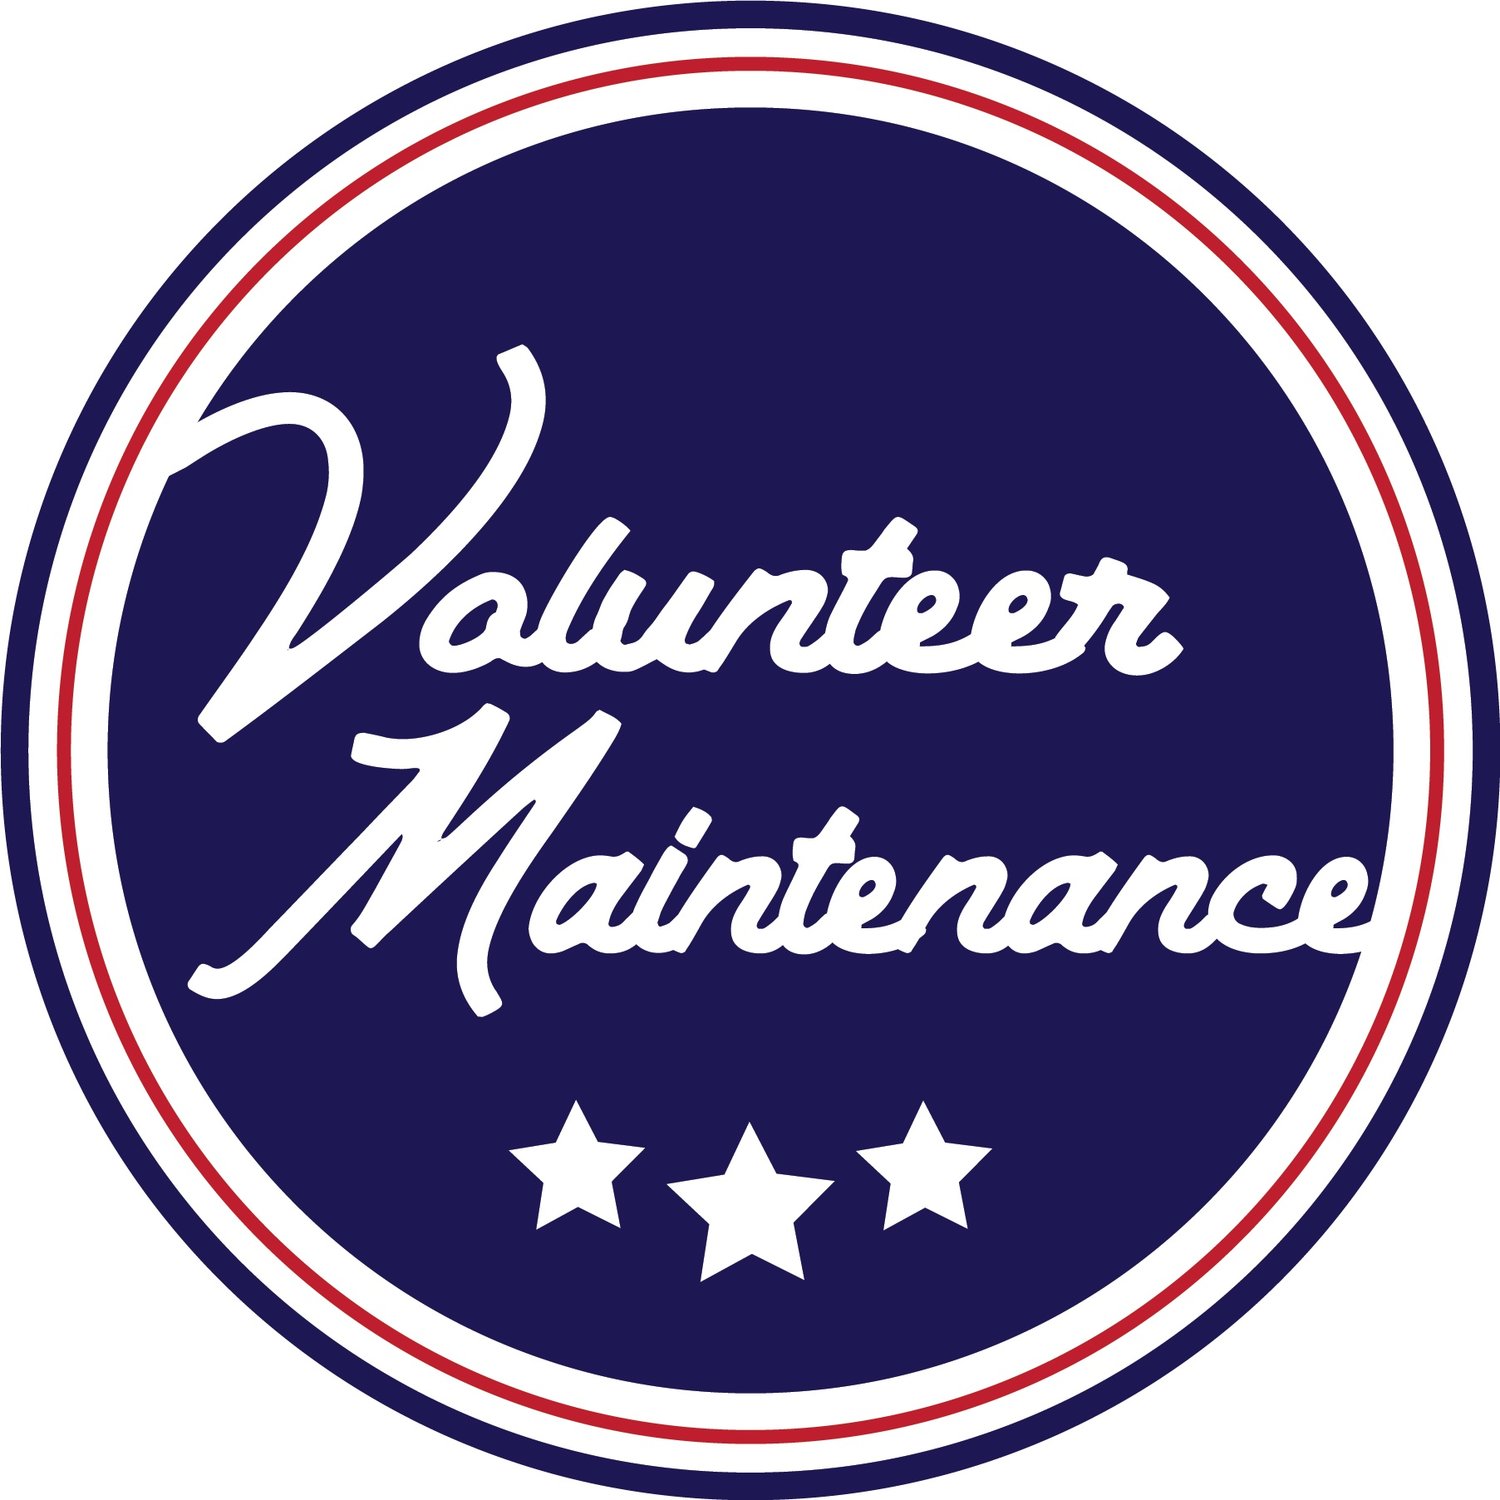 Volunteer Maintenance